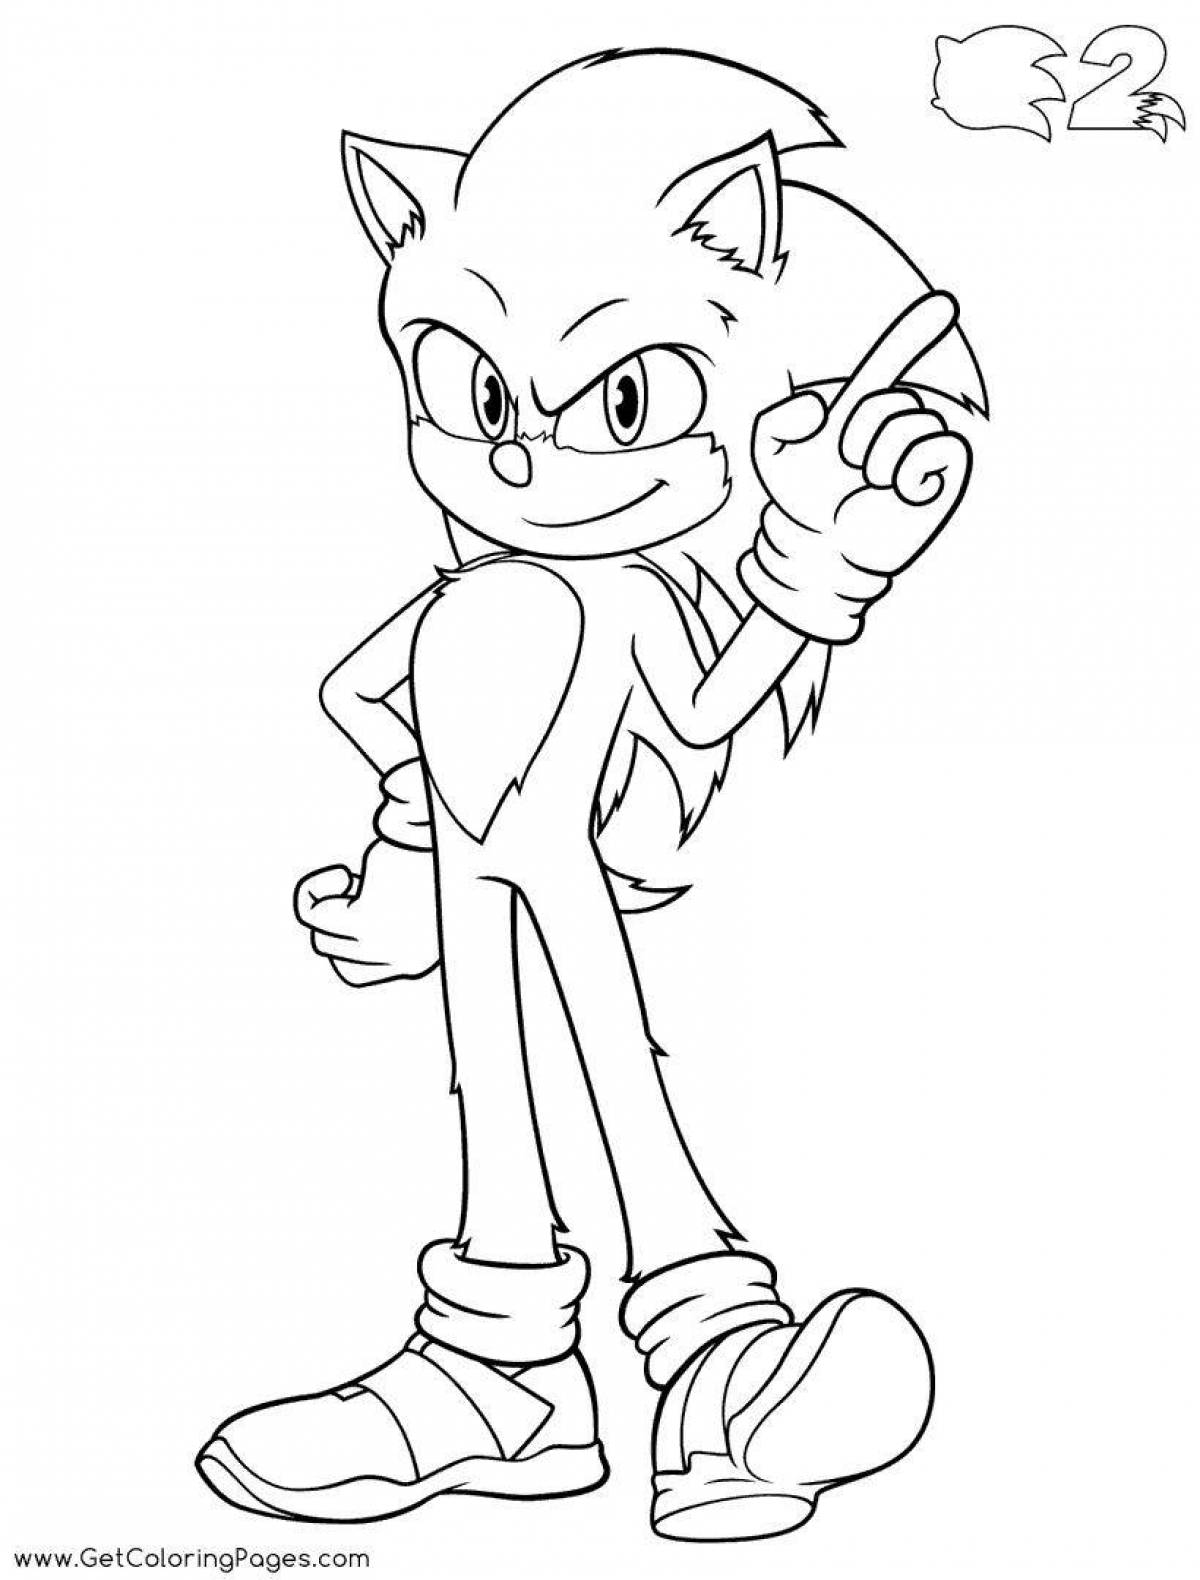 Sonic shader #1